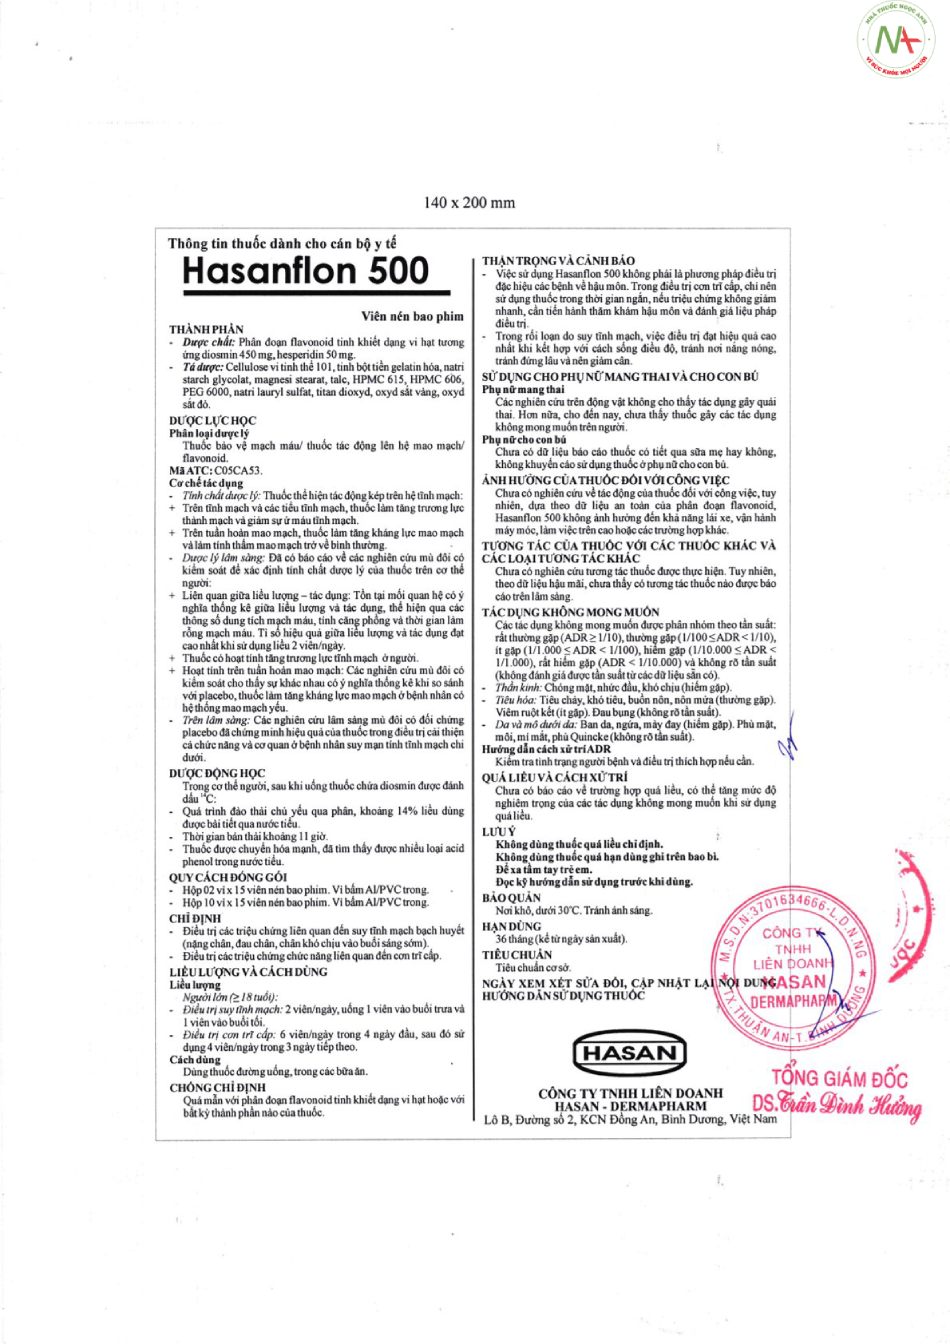 Hướng dẫn sử dụng thuốc Hasanflon 500